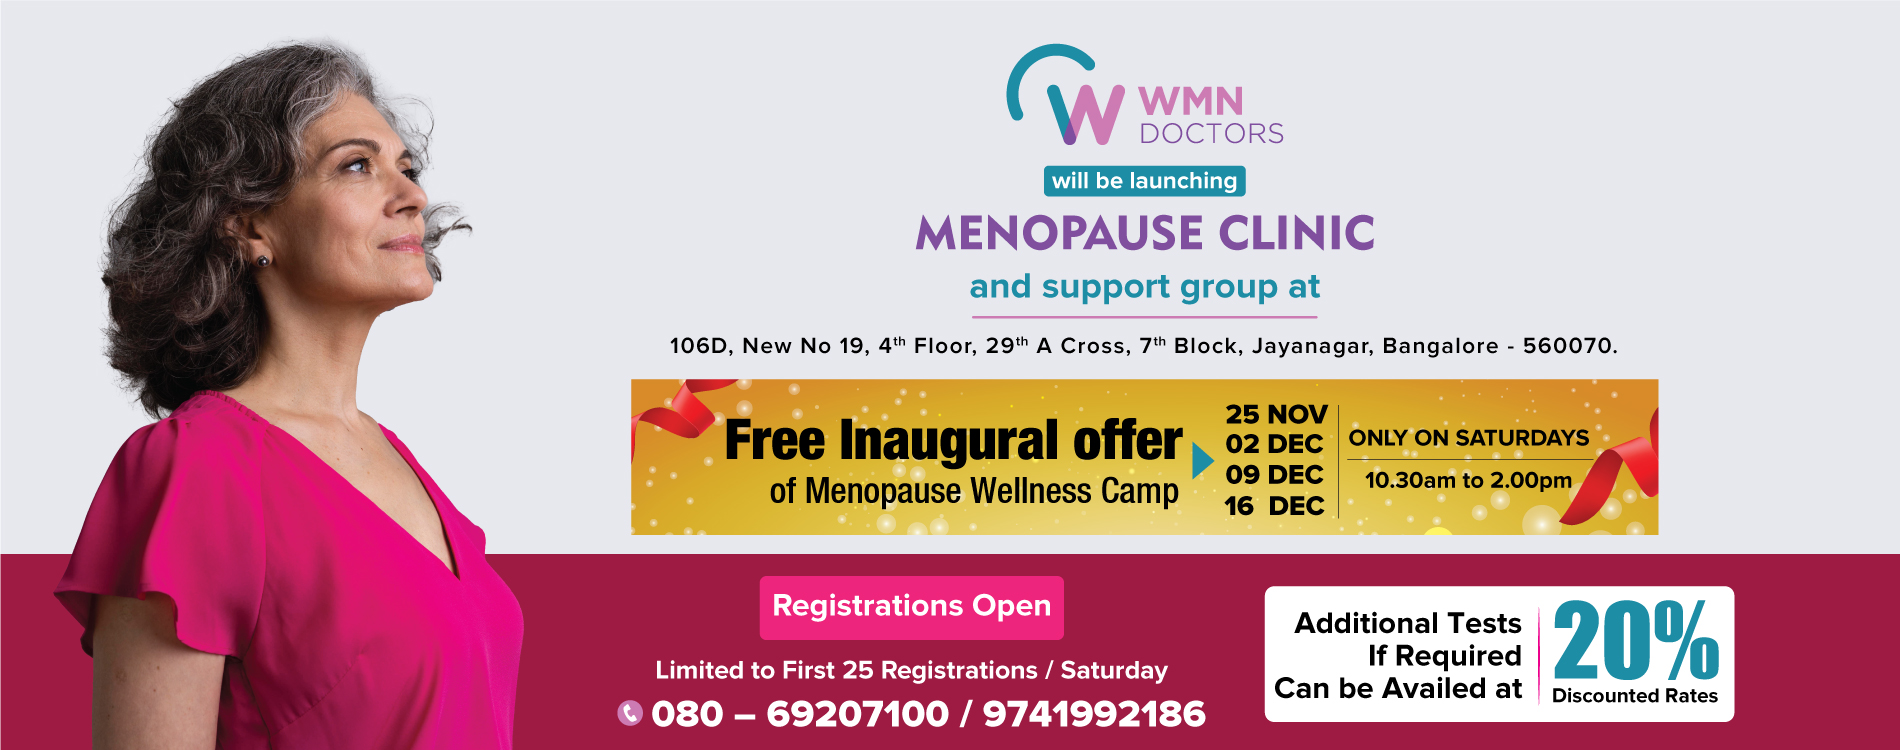 WMN-Menopause-Clinic-Bengalore